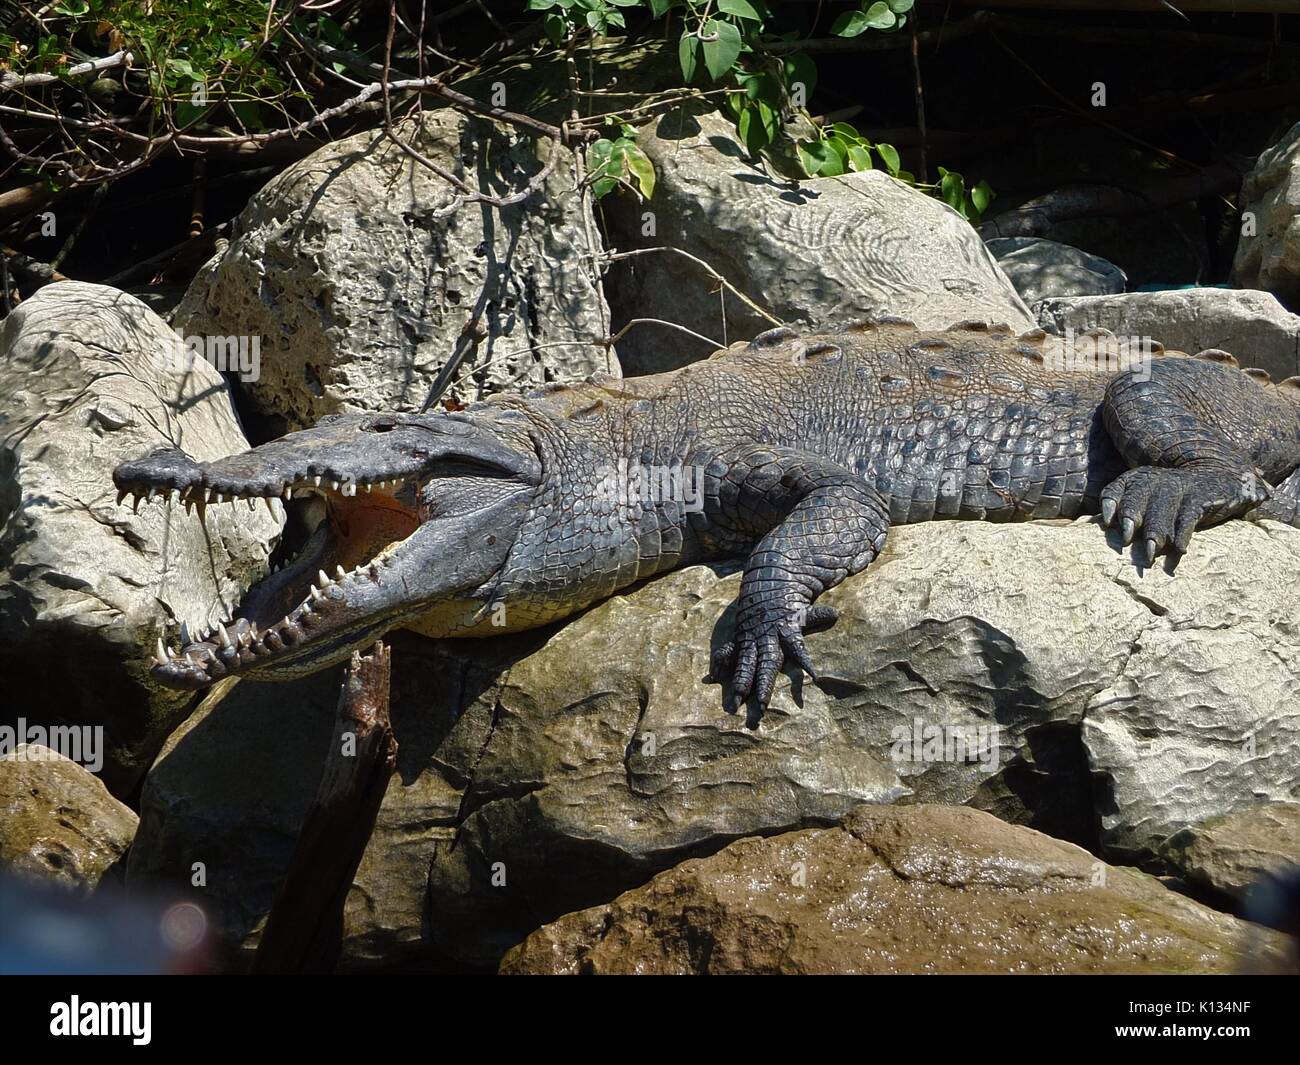 Big lizard, Chiapas, Mexico. Stock Photo